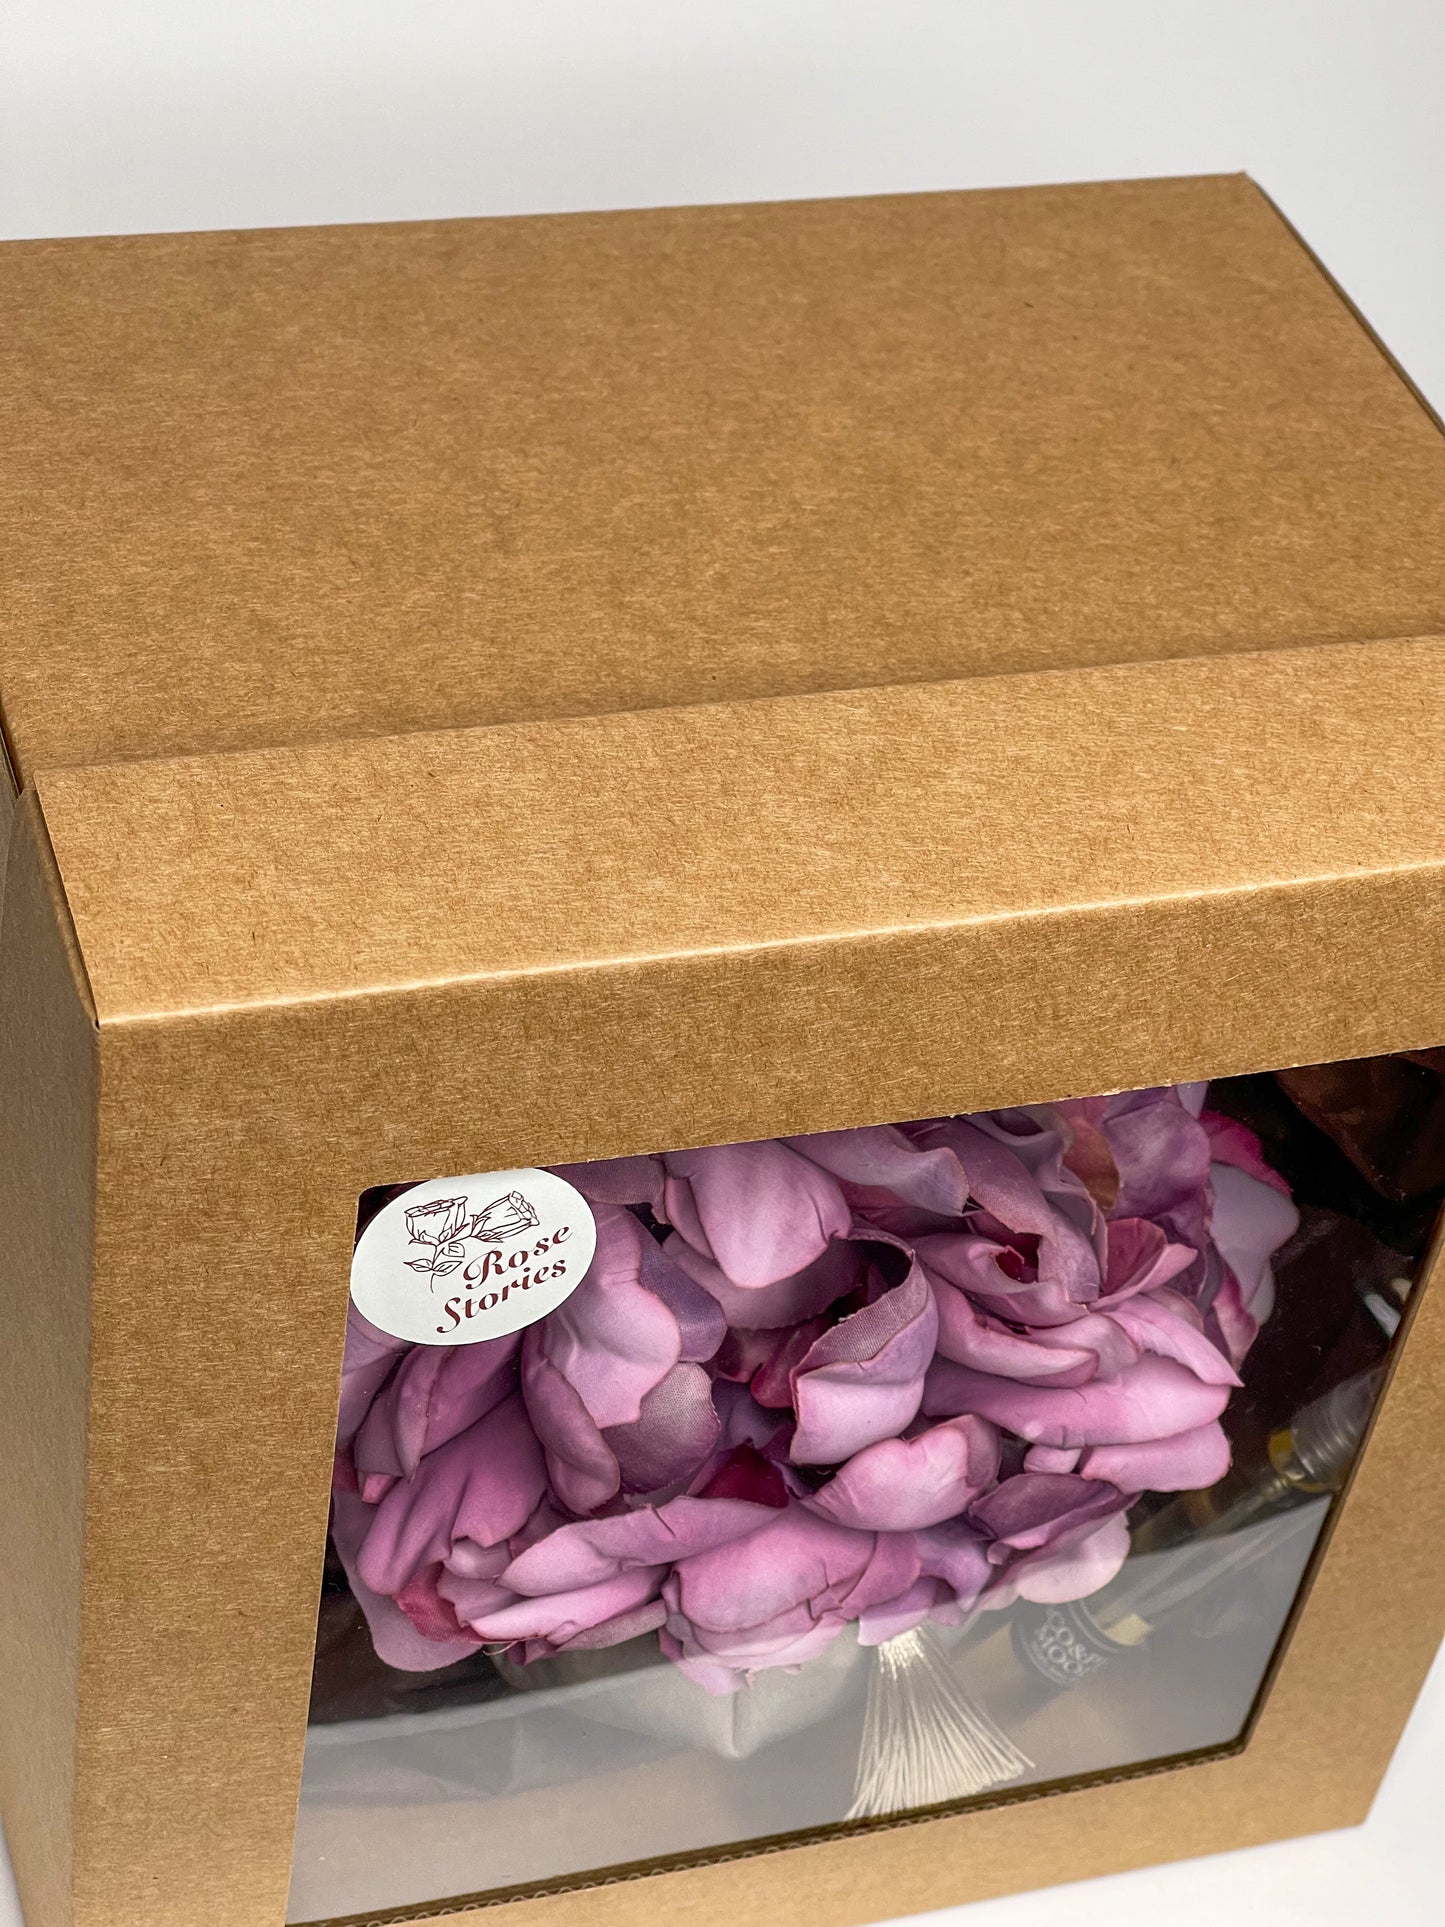 Home fragrance "Eggplant peonies"